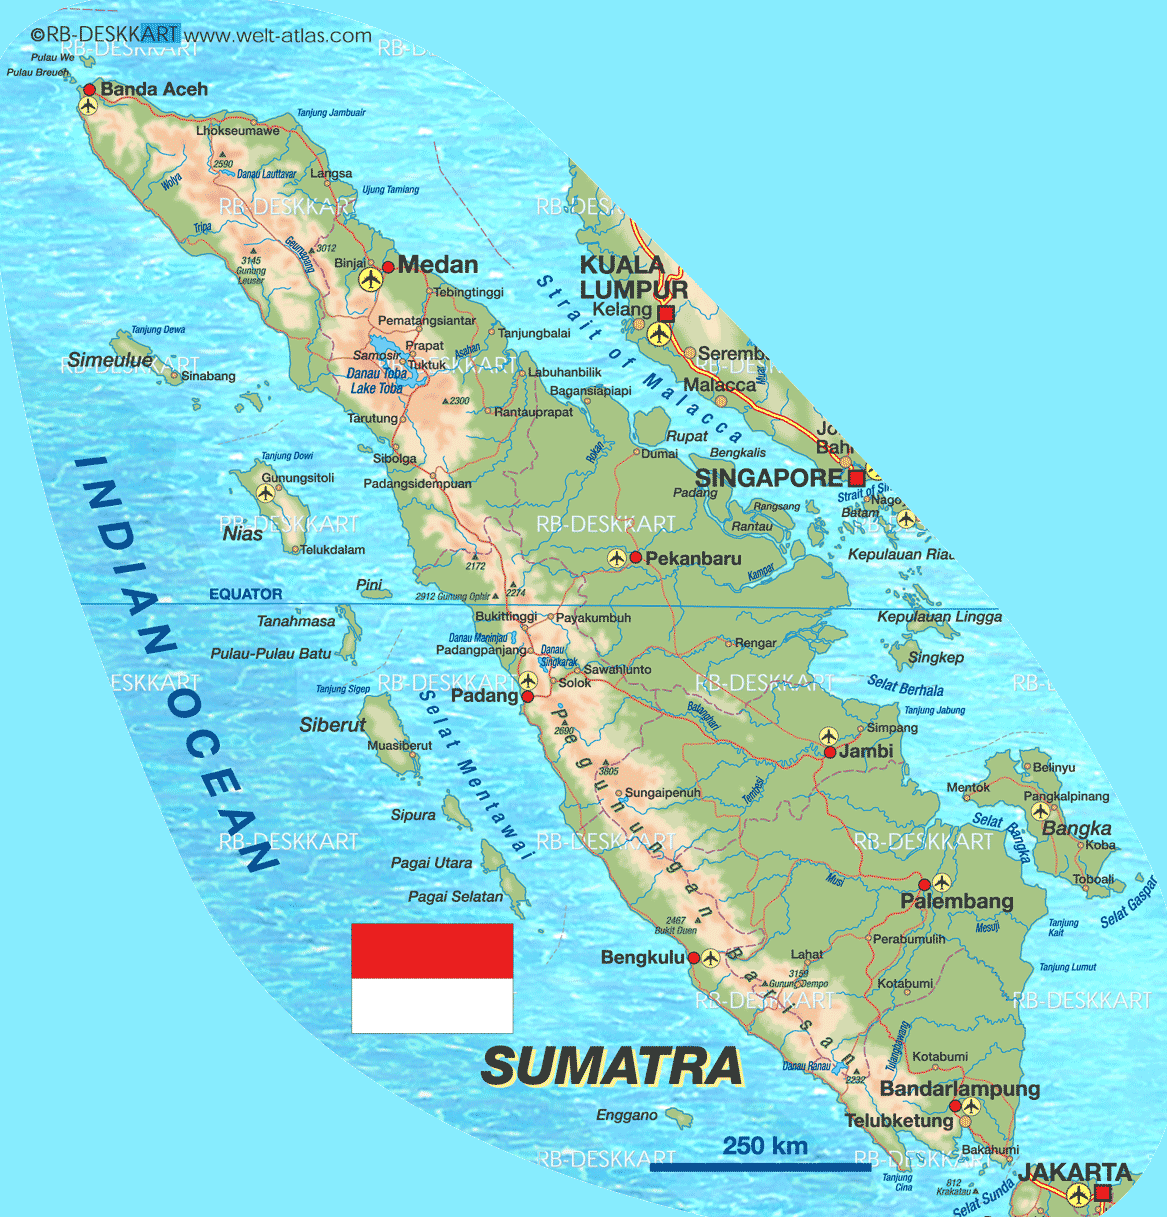  Sumatra   Indonesia Travel and Tourism info